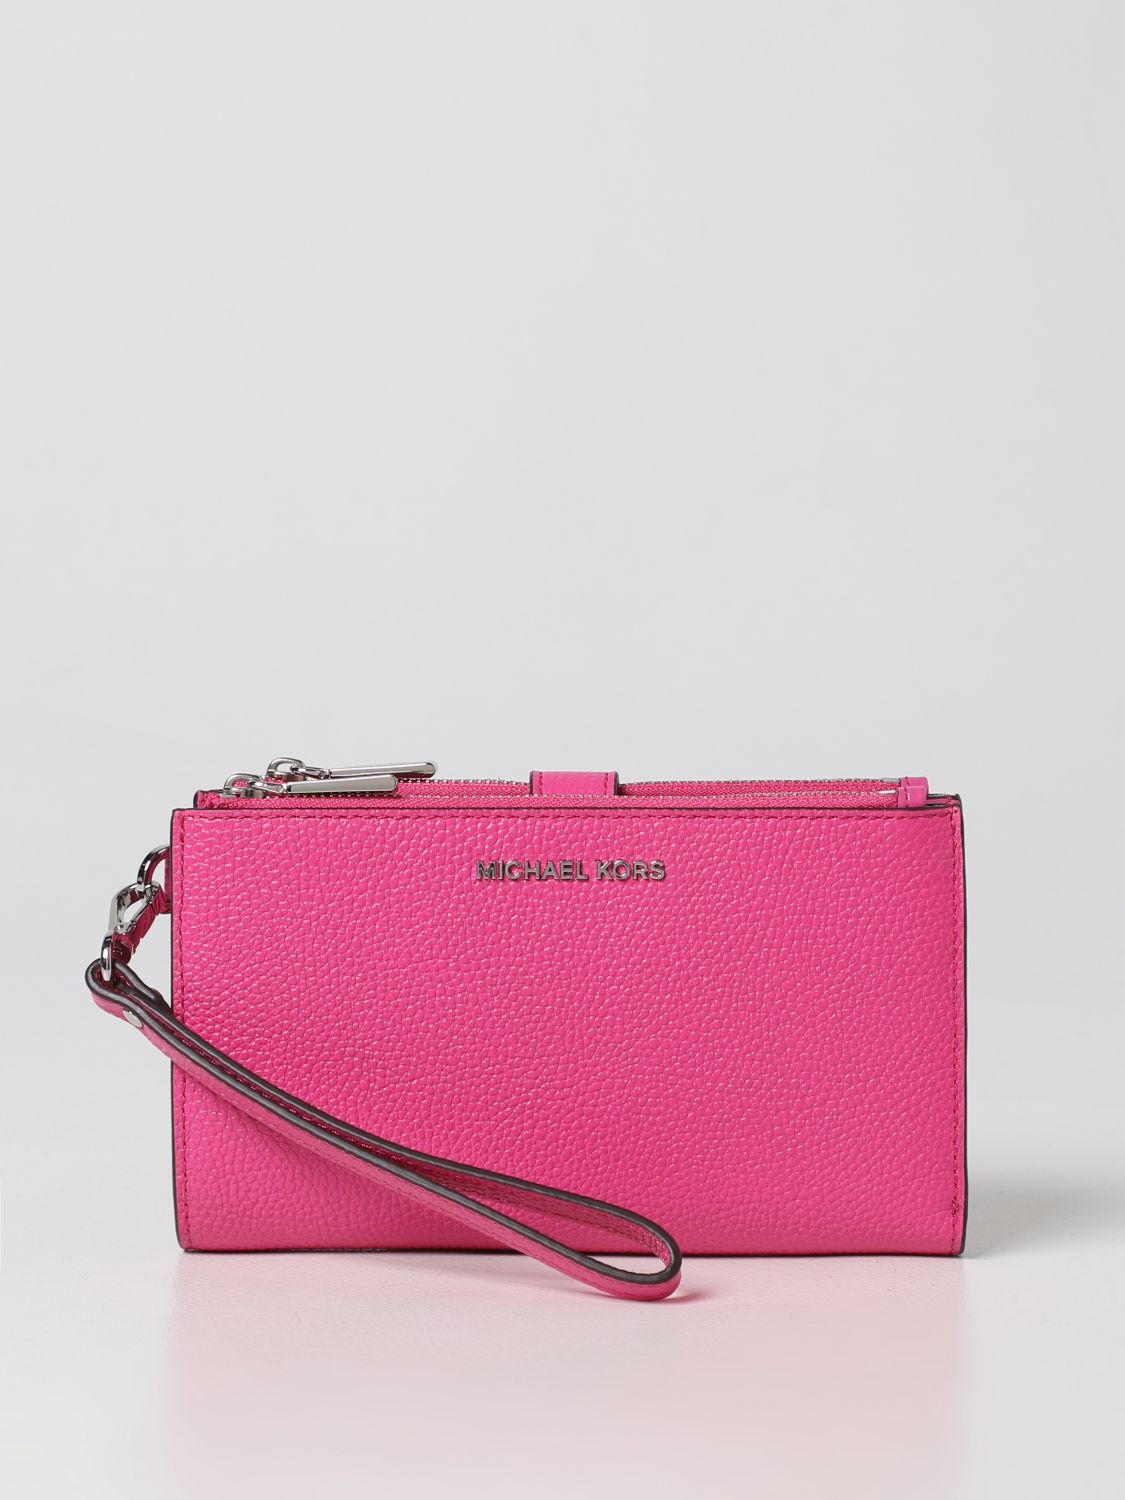 MICHAEL KORS: wallet for woman - Cherry | Michael Kors wallet 34F9SAFW4L  online on 